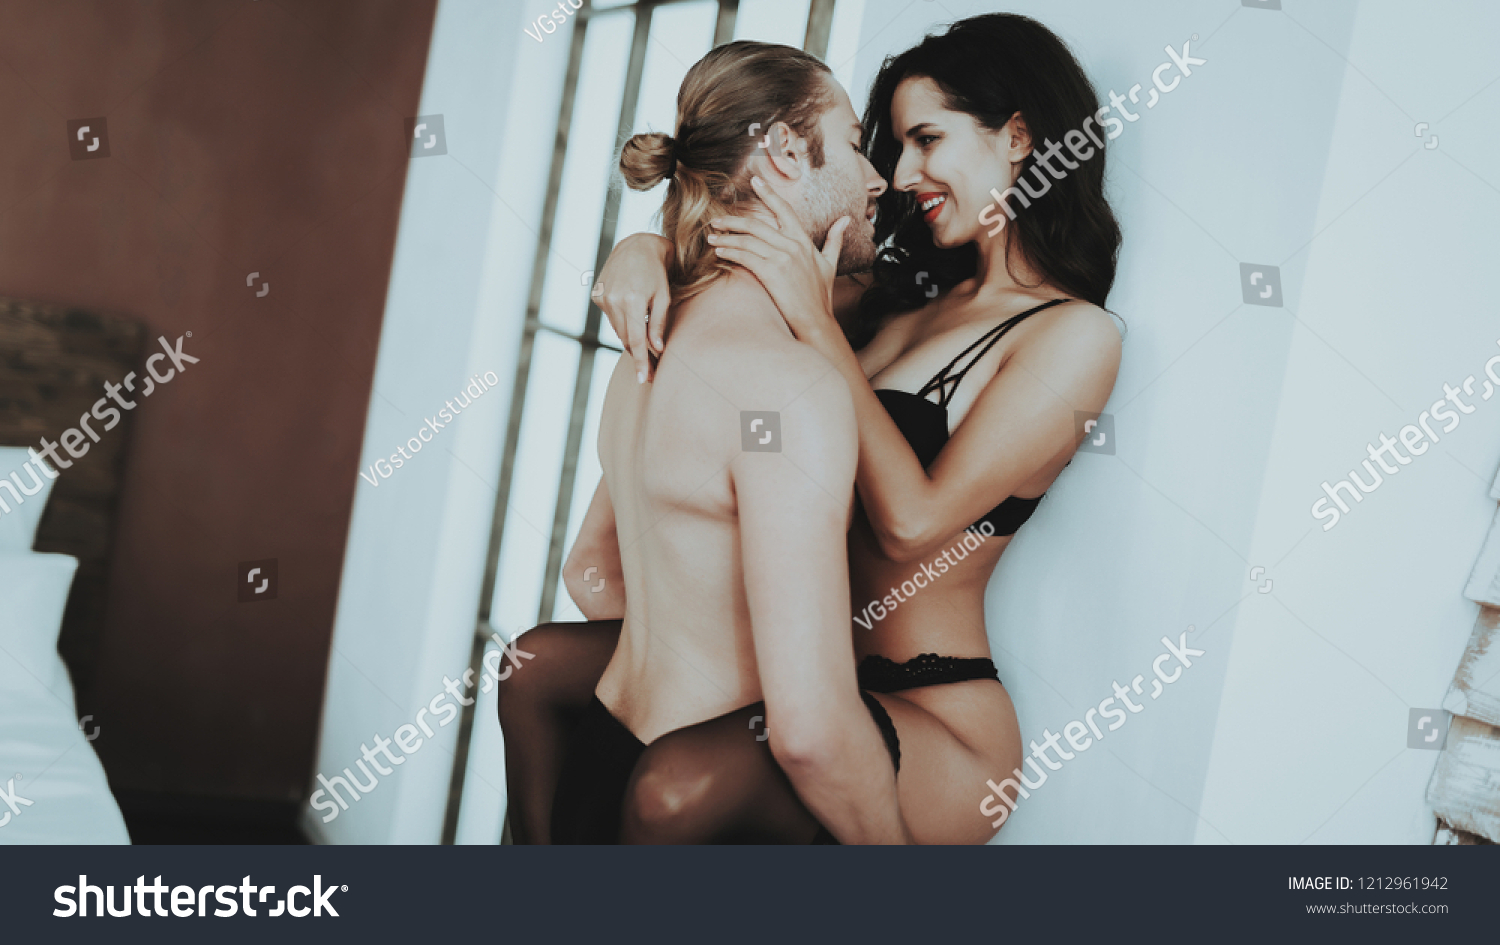 Brunette having passionate sex-nude gallery